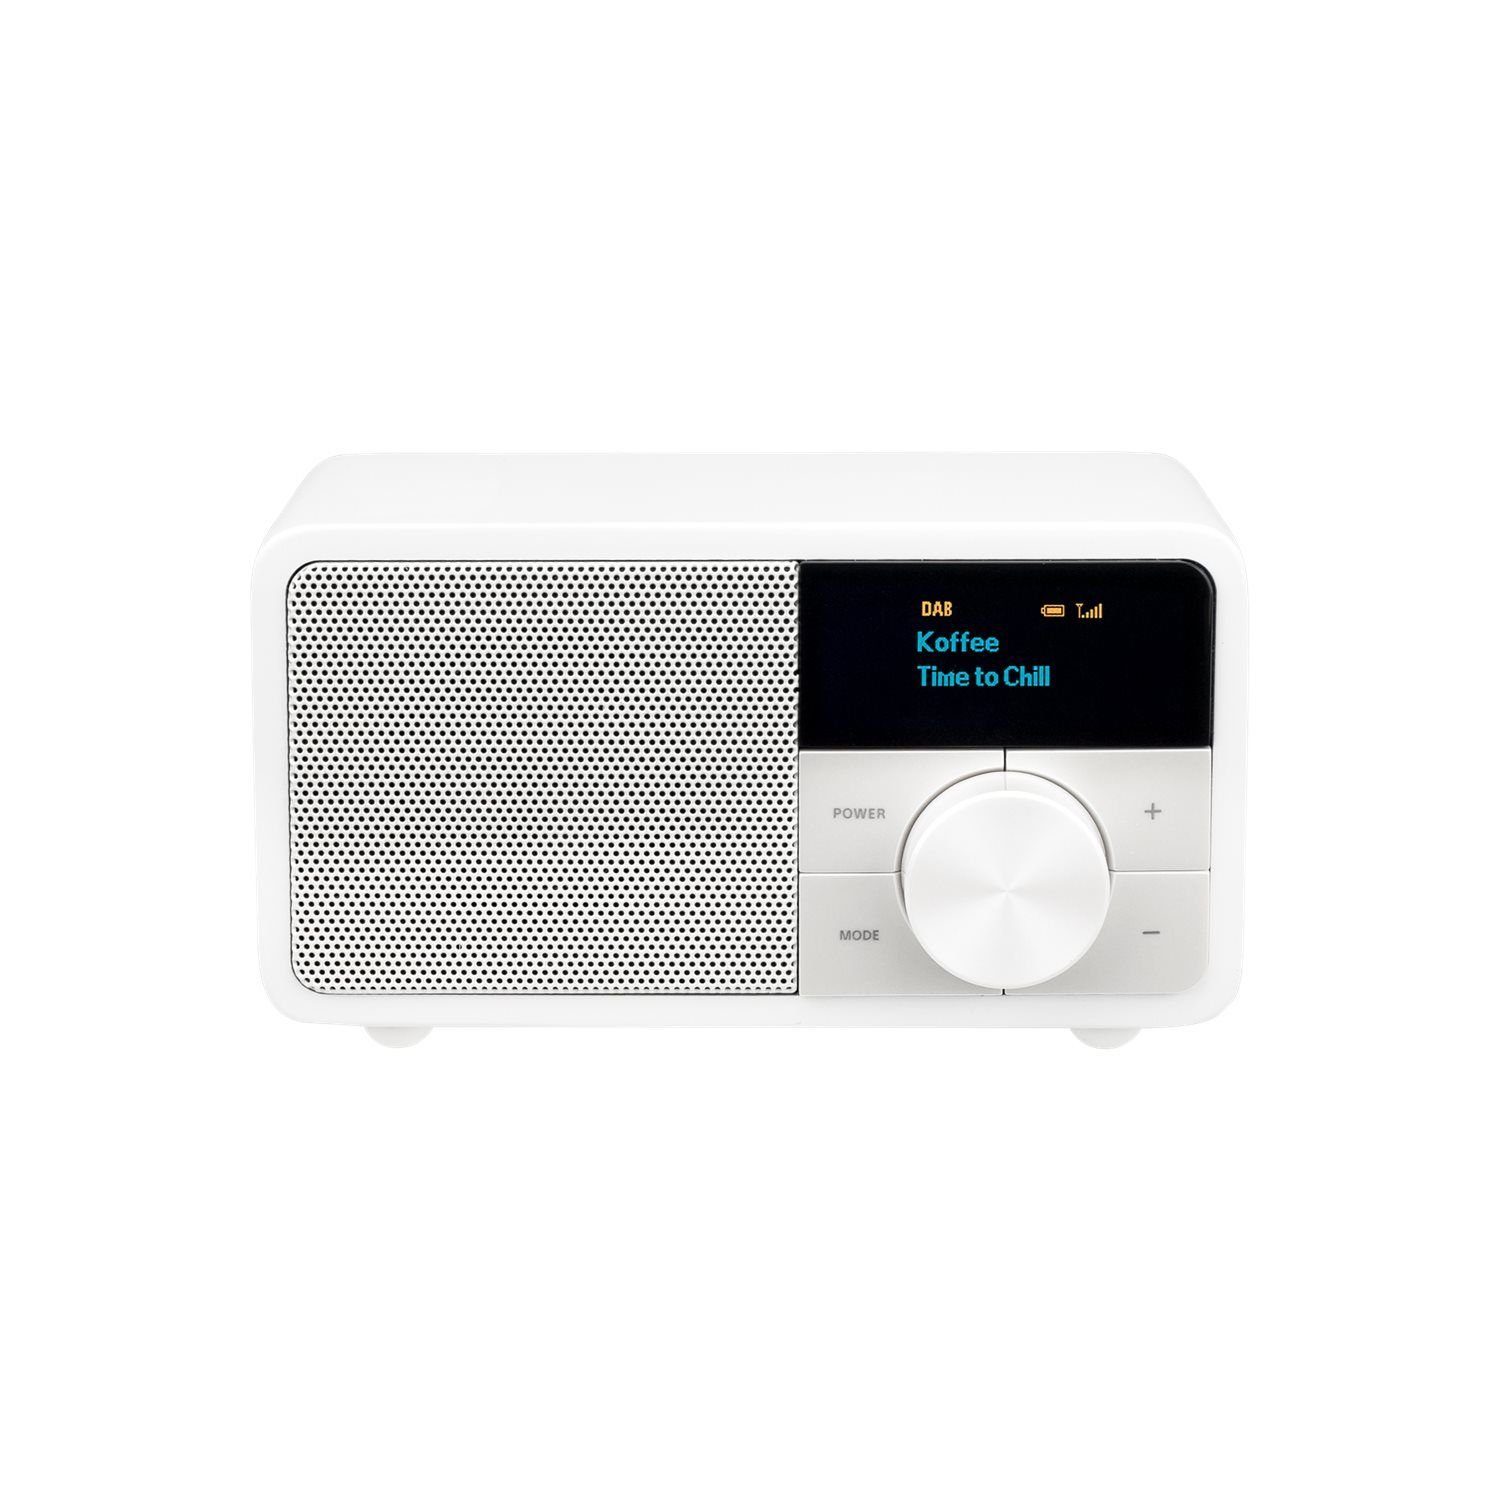 Kathrein »DAB+ 1 mini DAB+ Radio, UKW, Bluetooth, Akku, kompakt« Retro-Radio  (DAB) online kaufen | OTTO